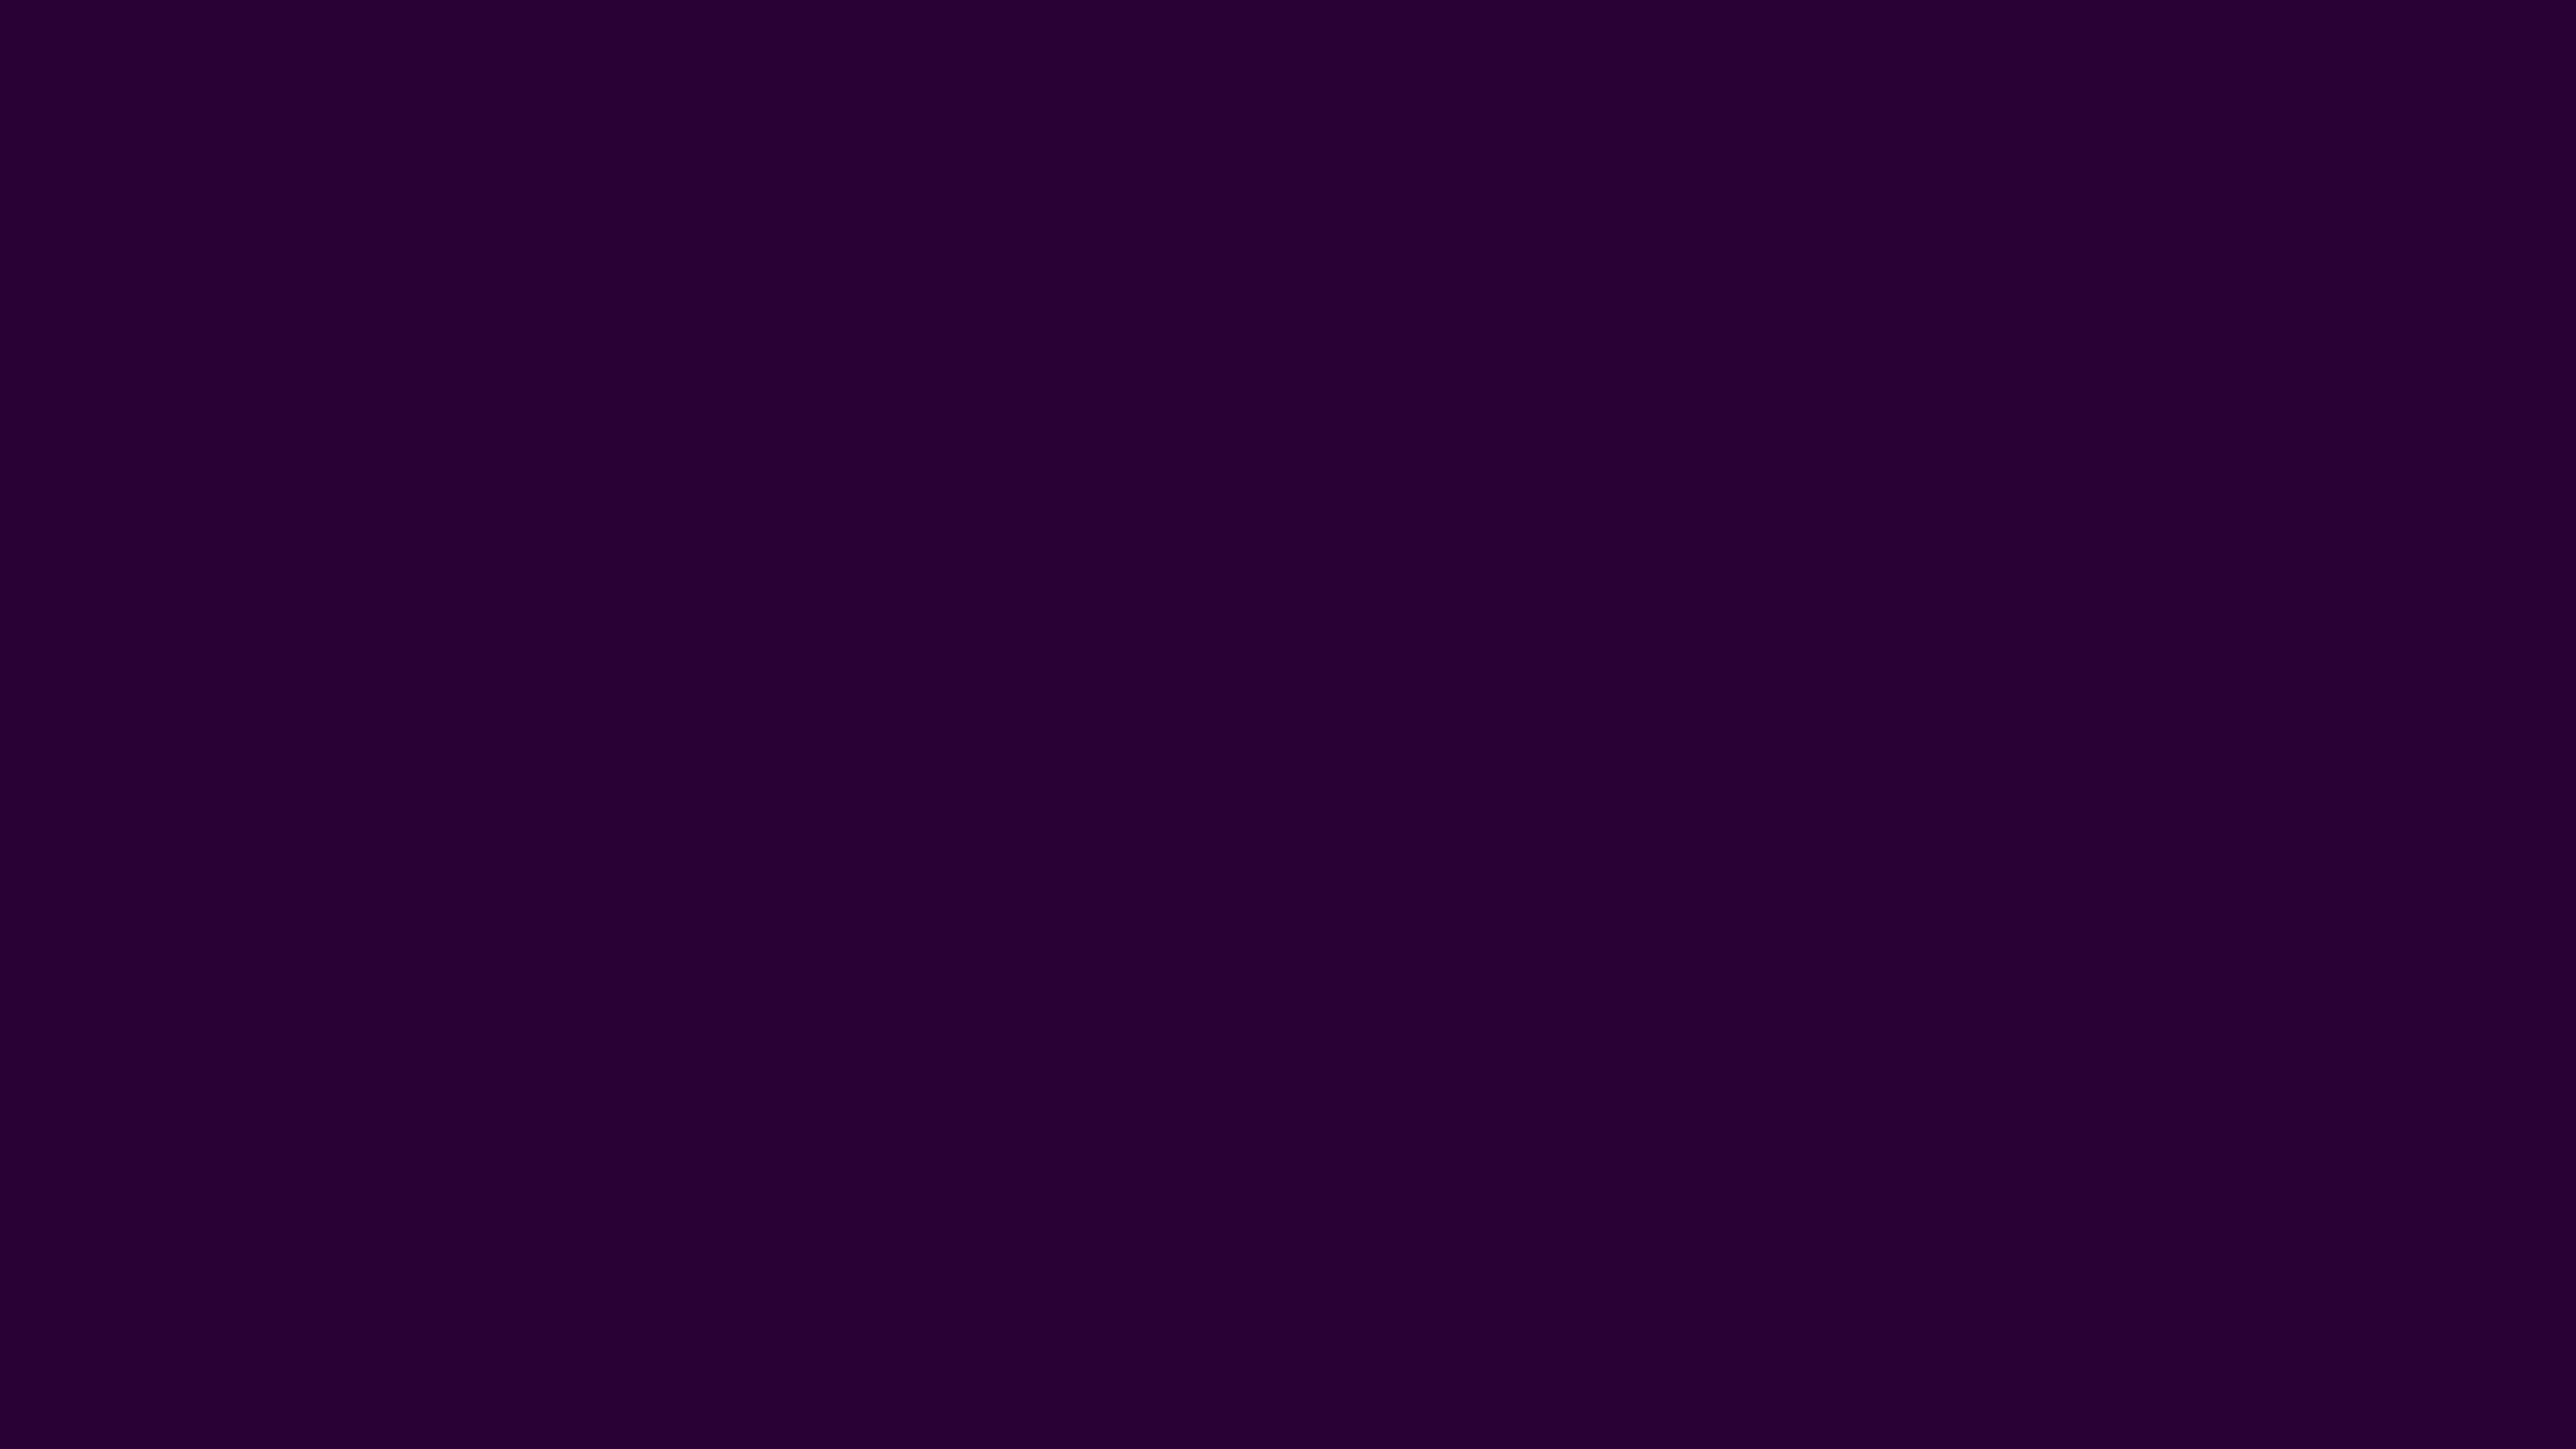 Very Dark Purple Solid Color Background Image | Free Image Generator